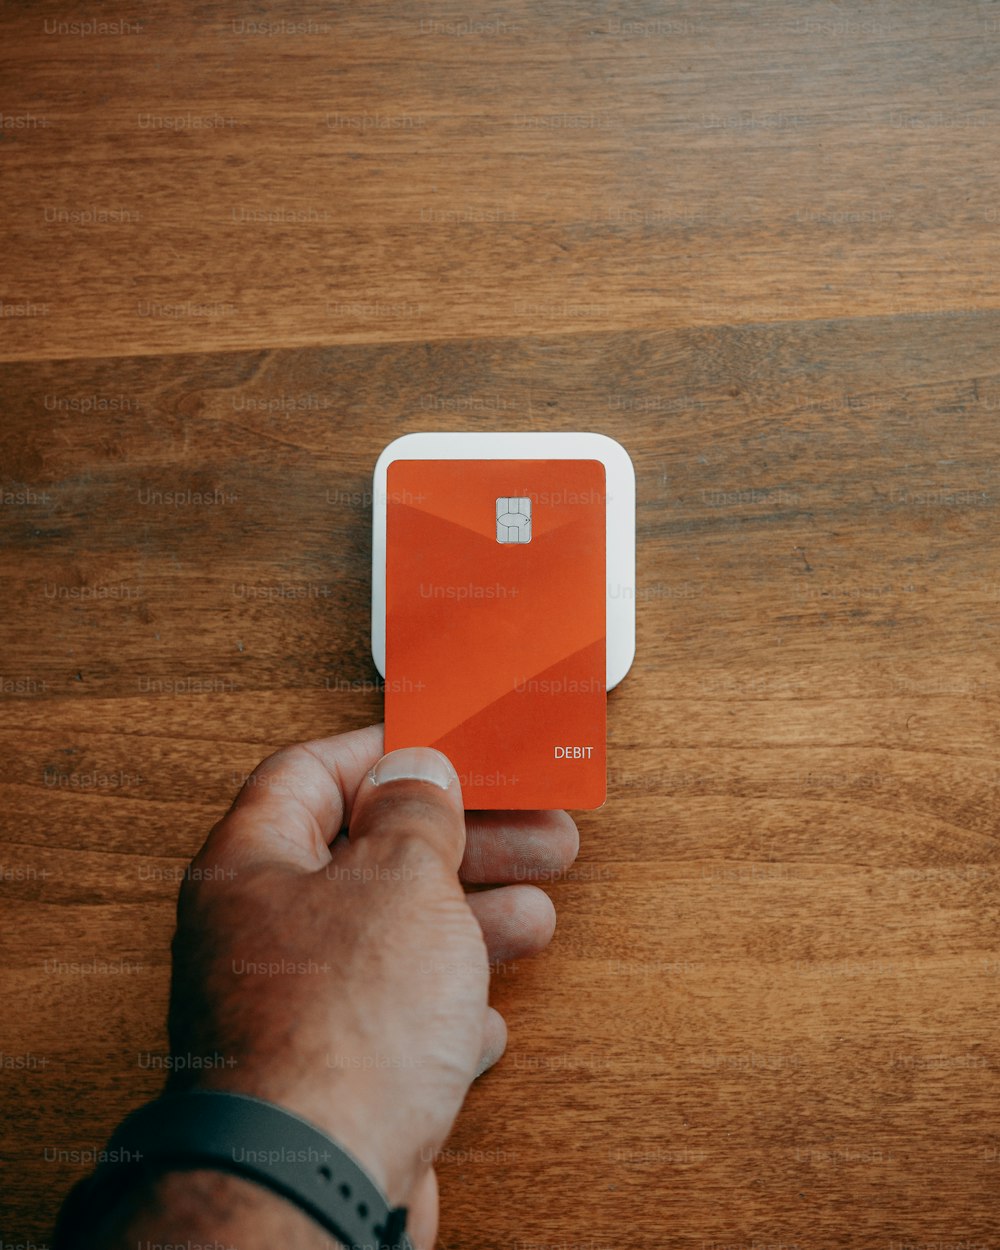 Una mano sosteniendo una tarjeta naranja encima de una mesa de madera